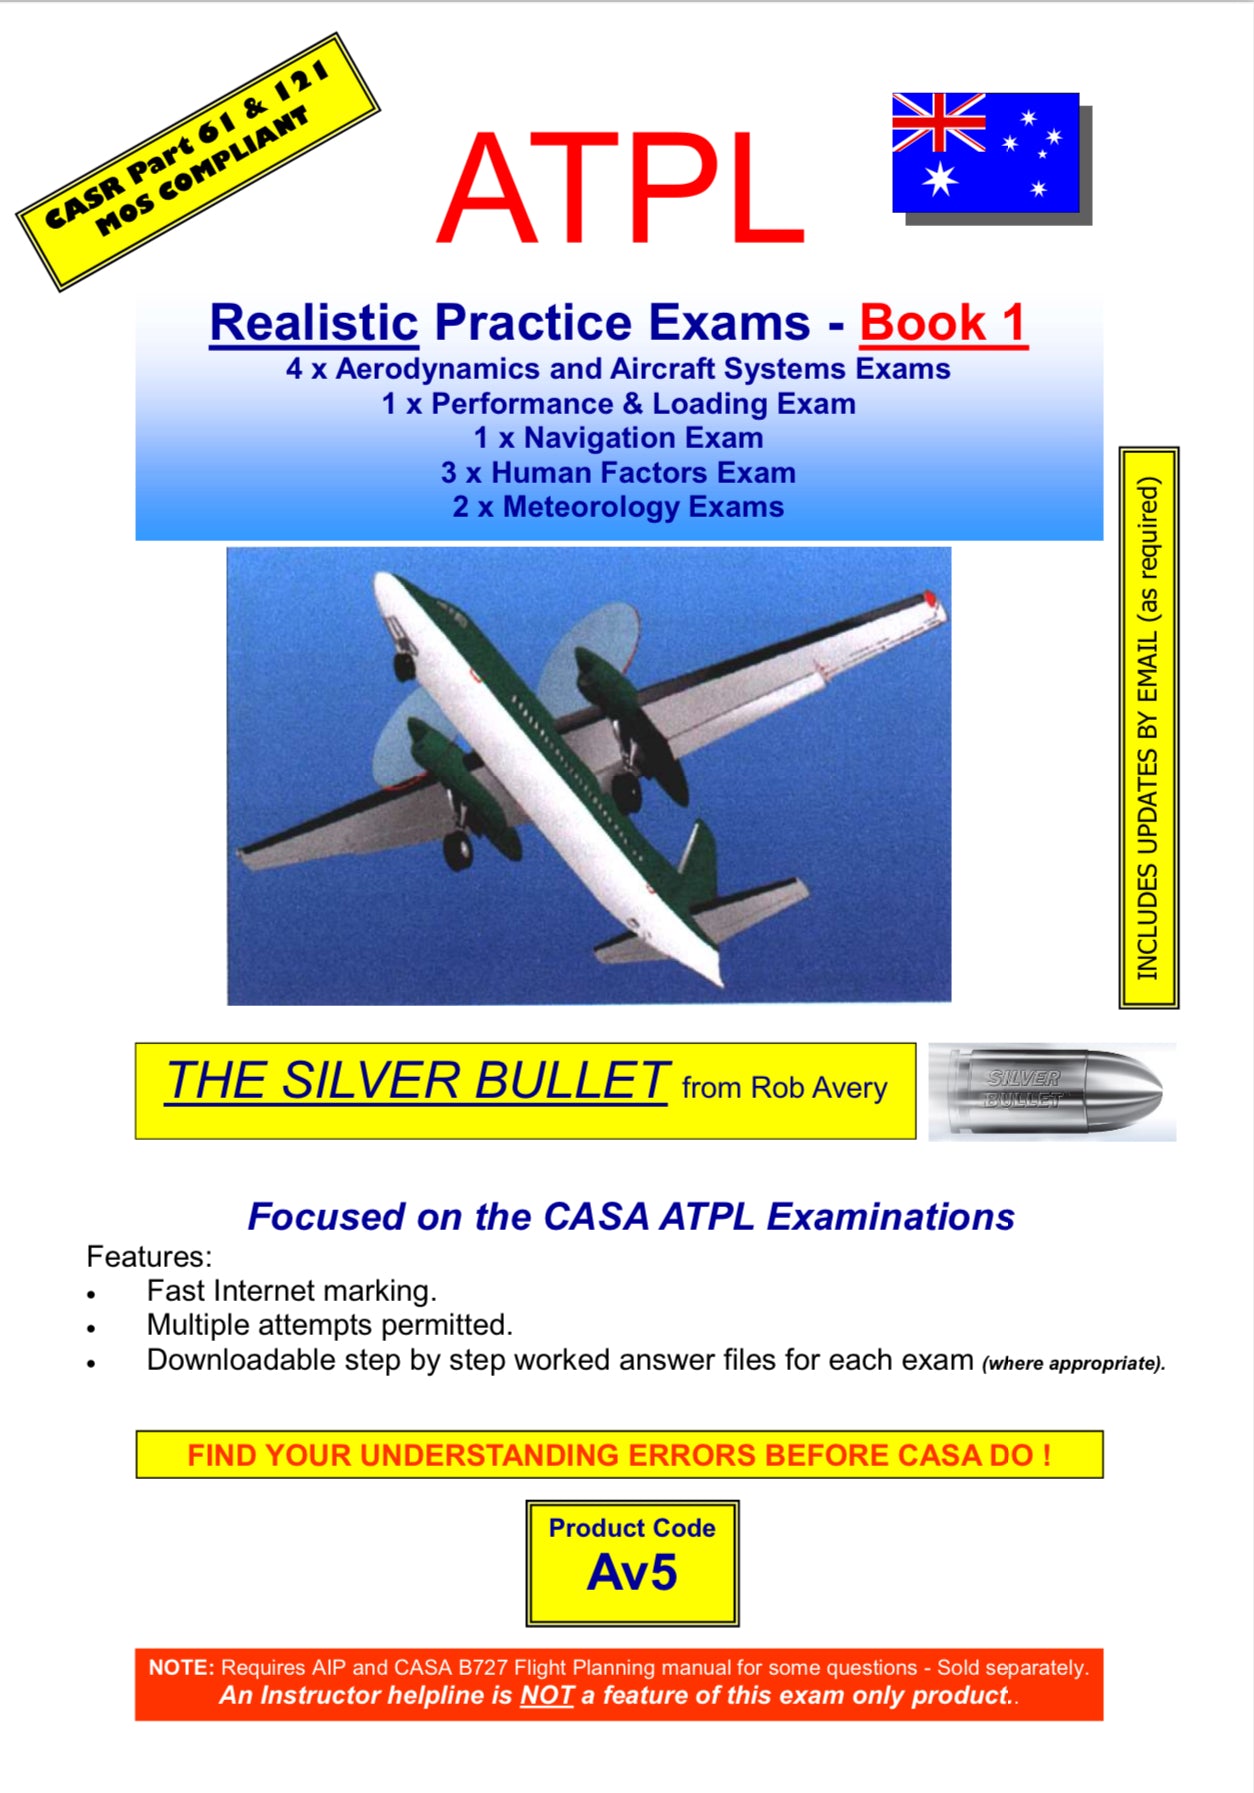 Avfacts by Rob Avery ATPL Practice Exams Book 1 - AV5